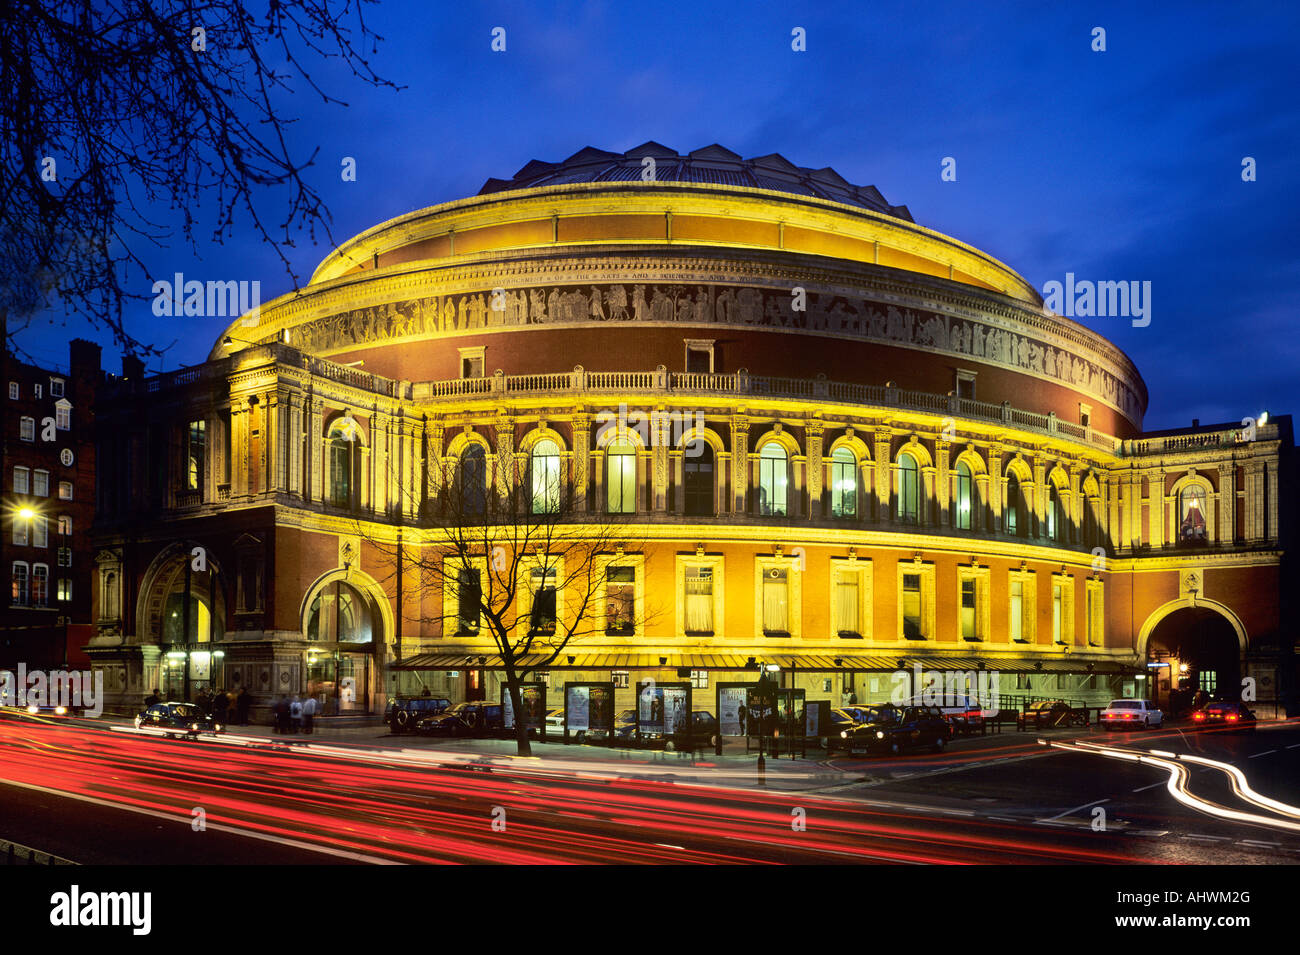 Royal albert Hall at night, London,England Stock Photo